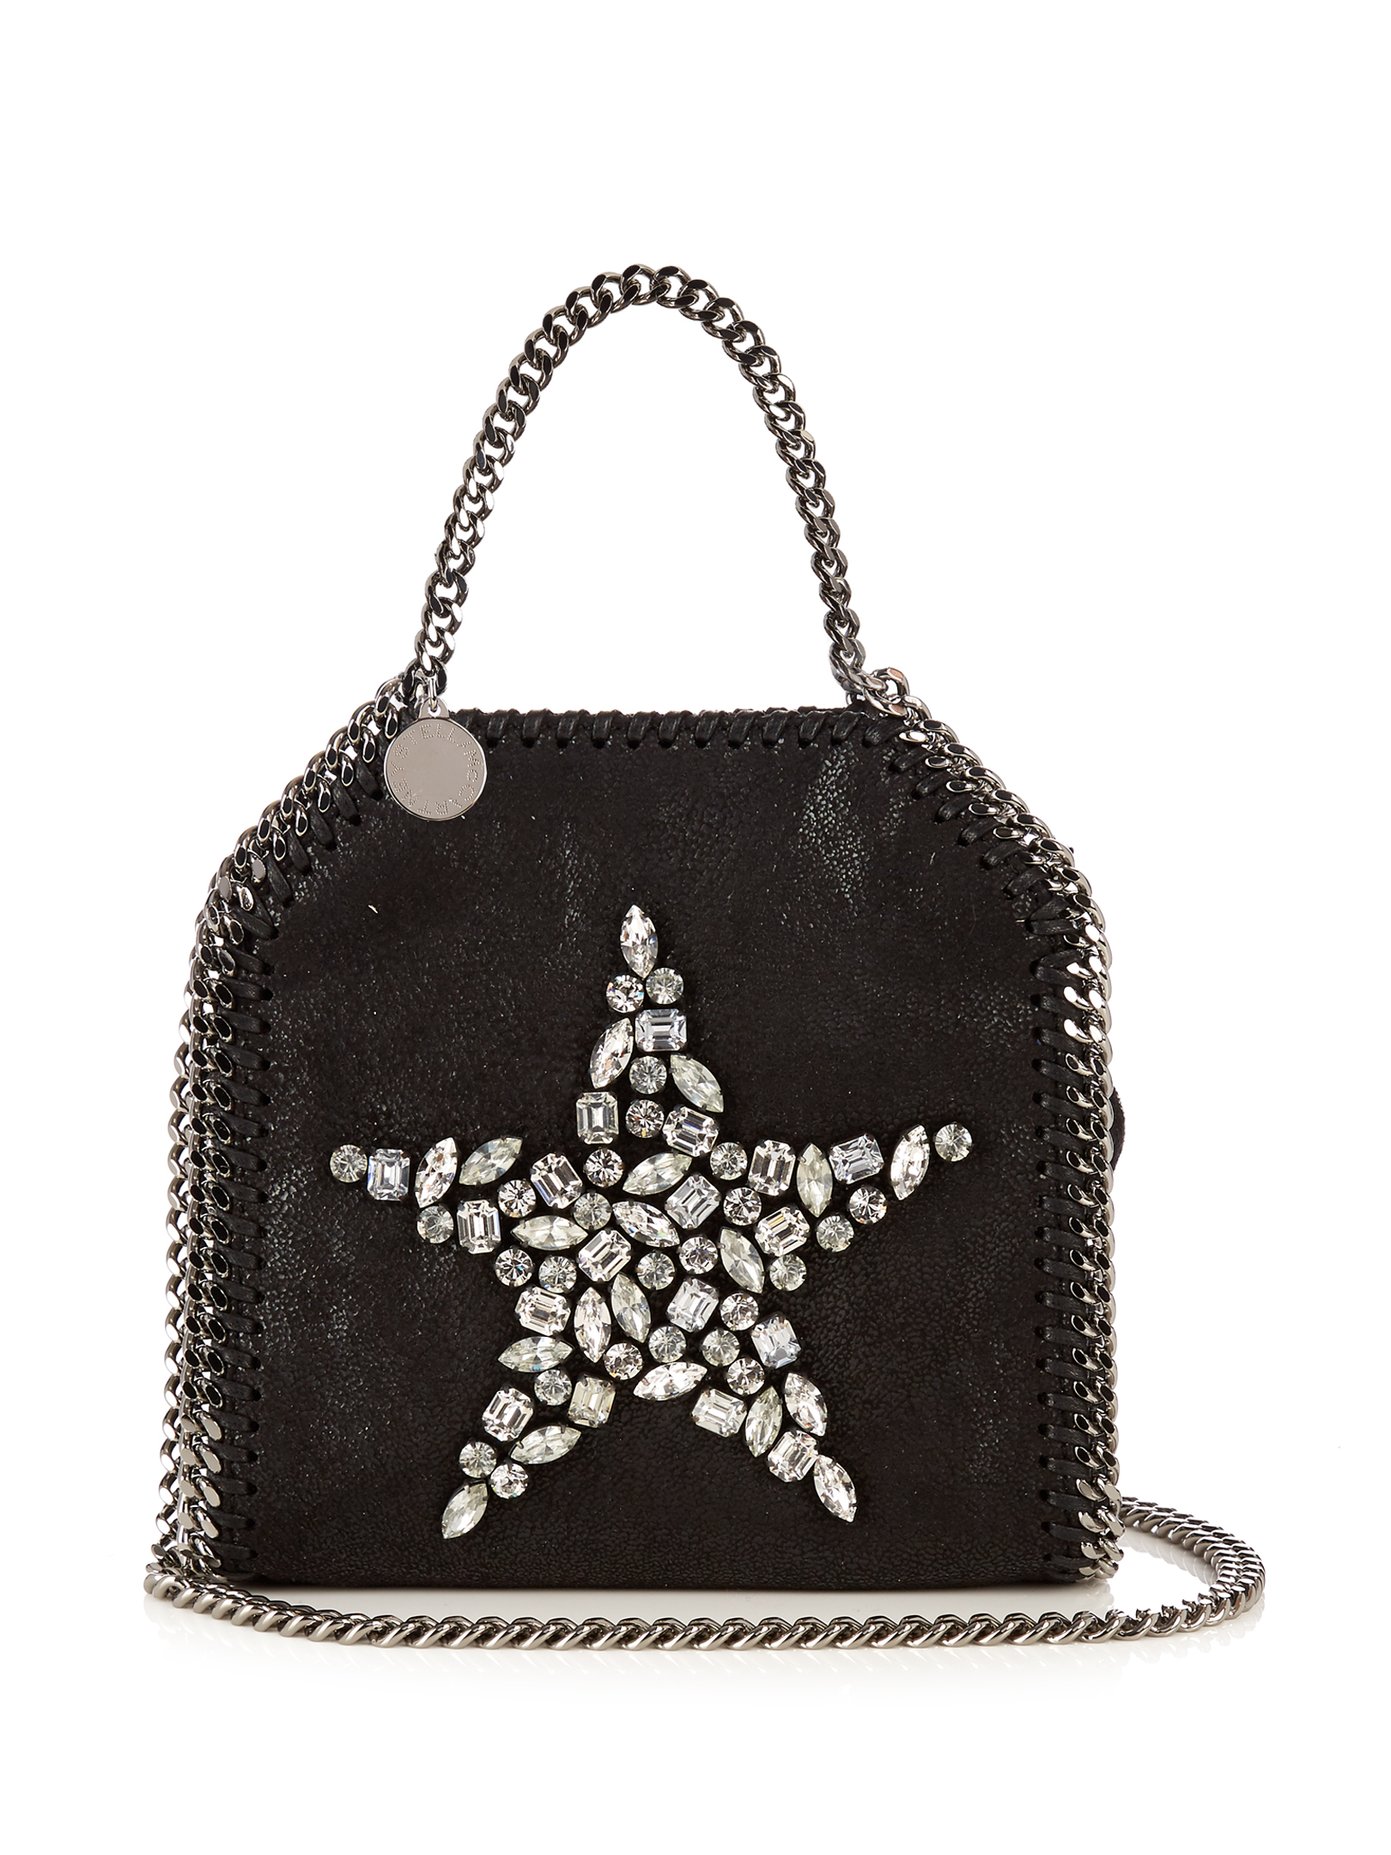 Stella mccartney handbags, Edgy bags, Purse styles